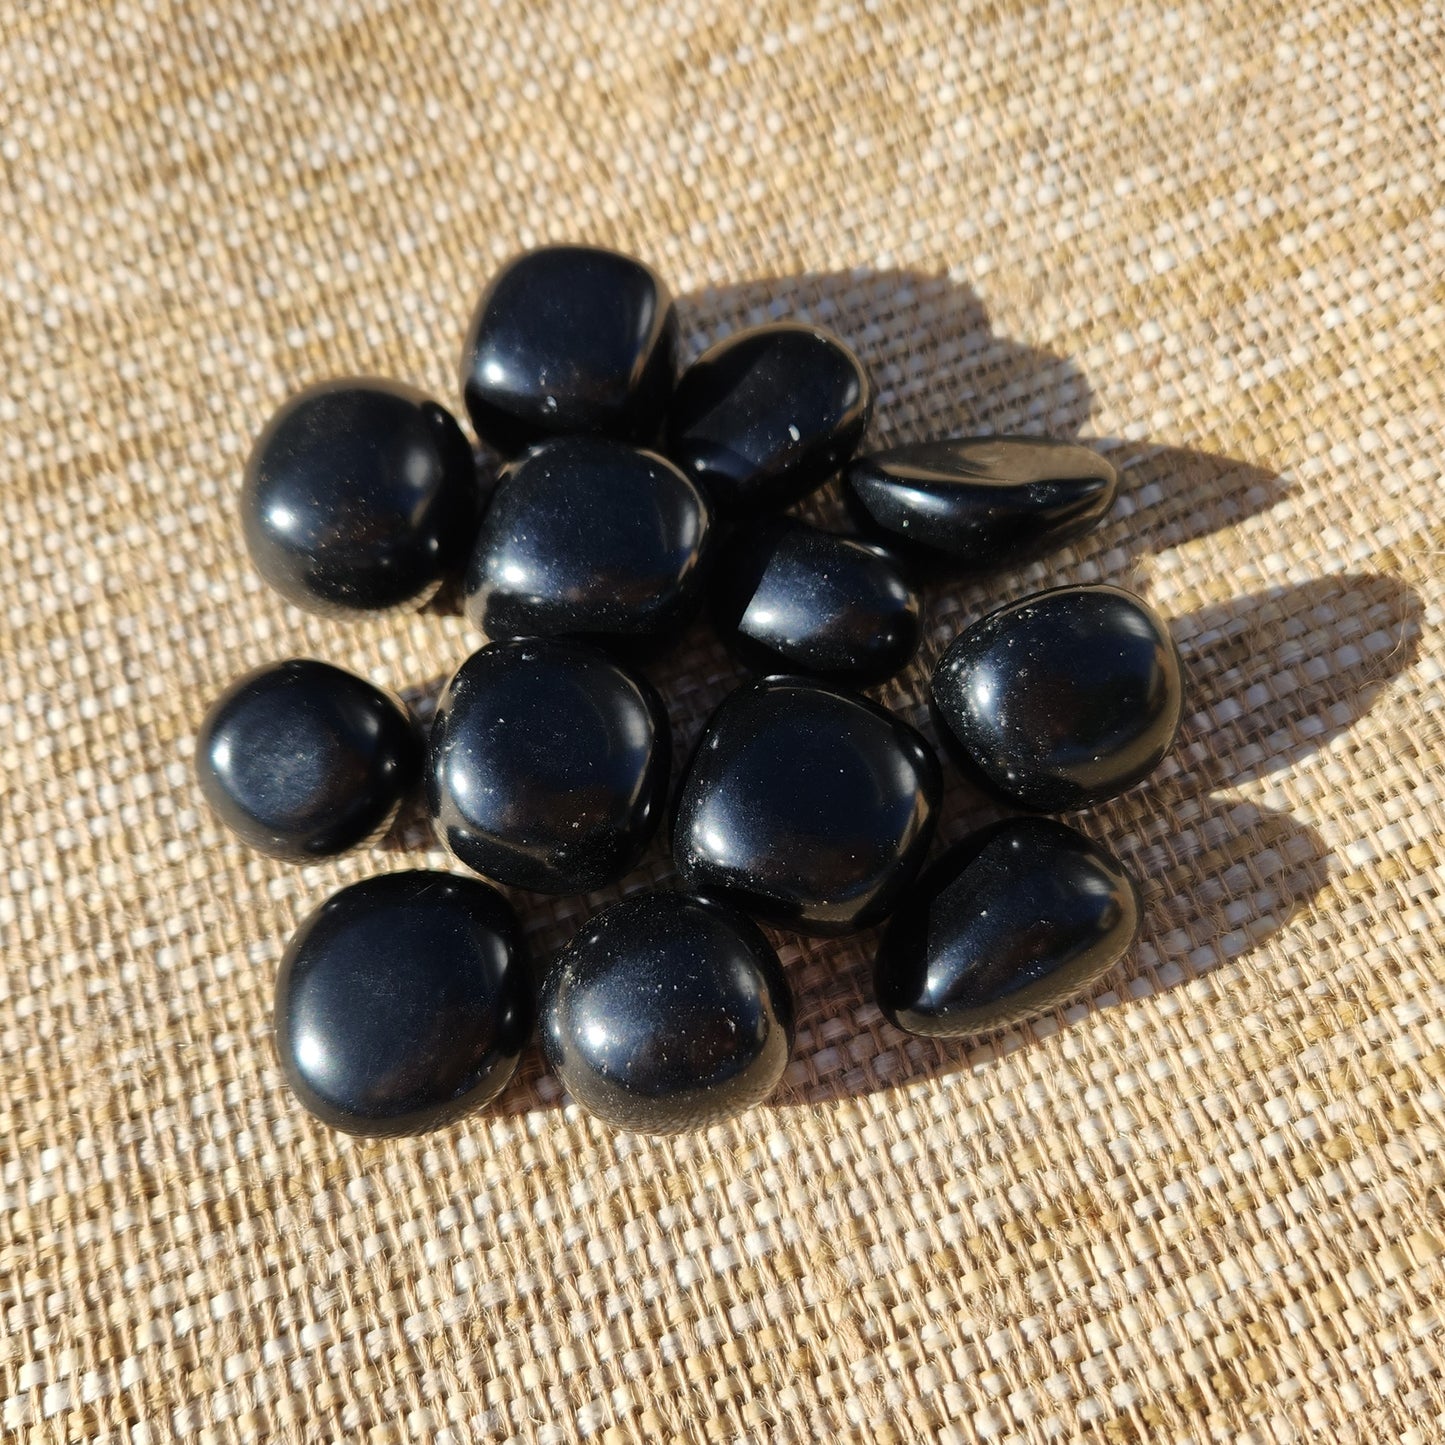 Black Obsidian Tumble